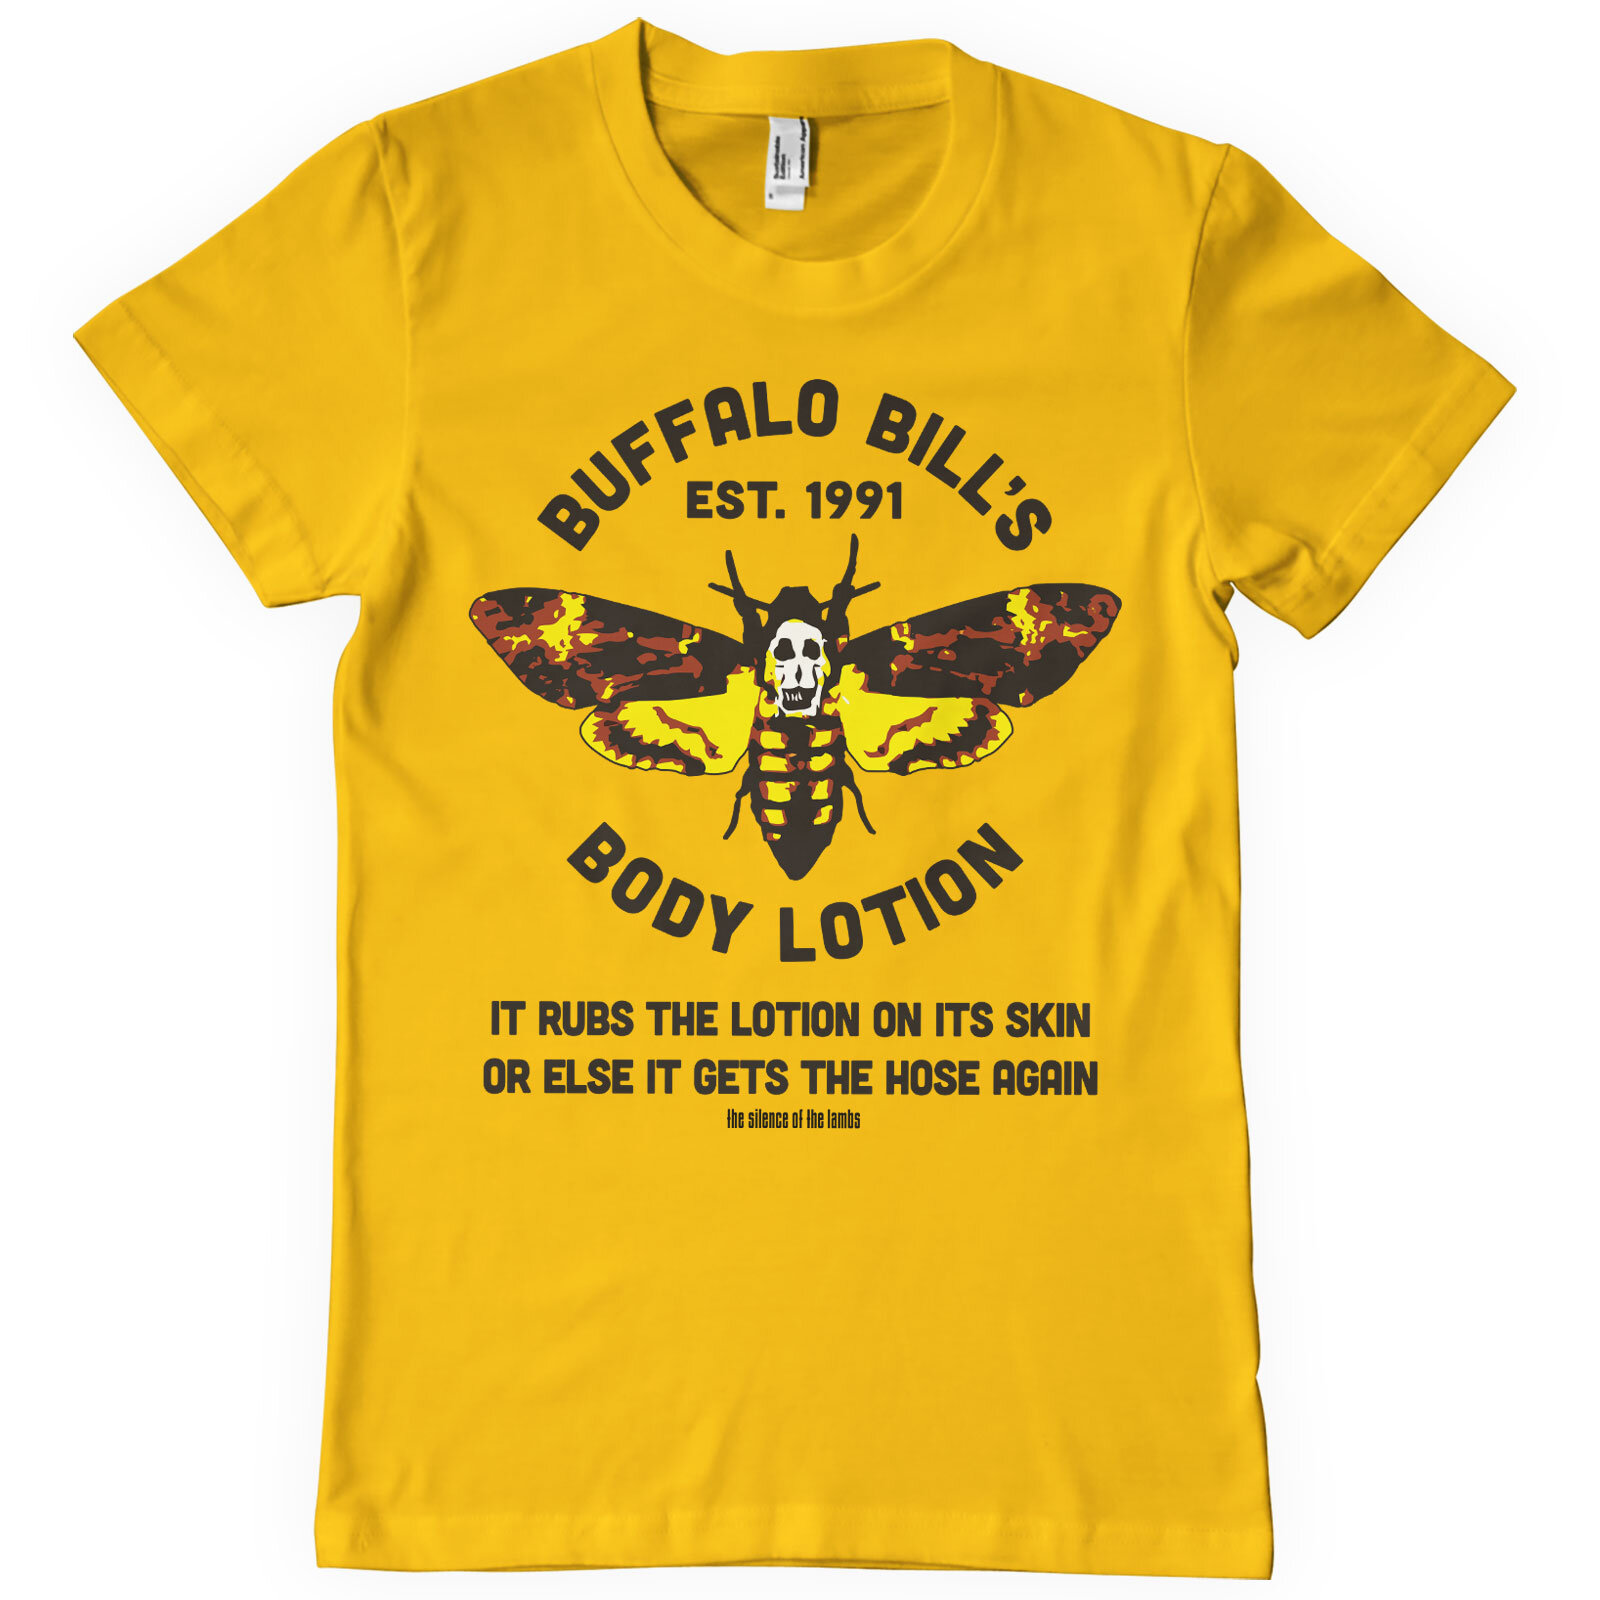 Buffalo Bill's Body Lotion T-Shirt